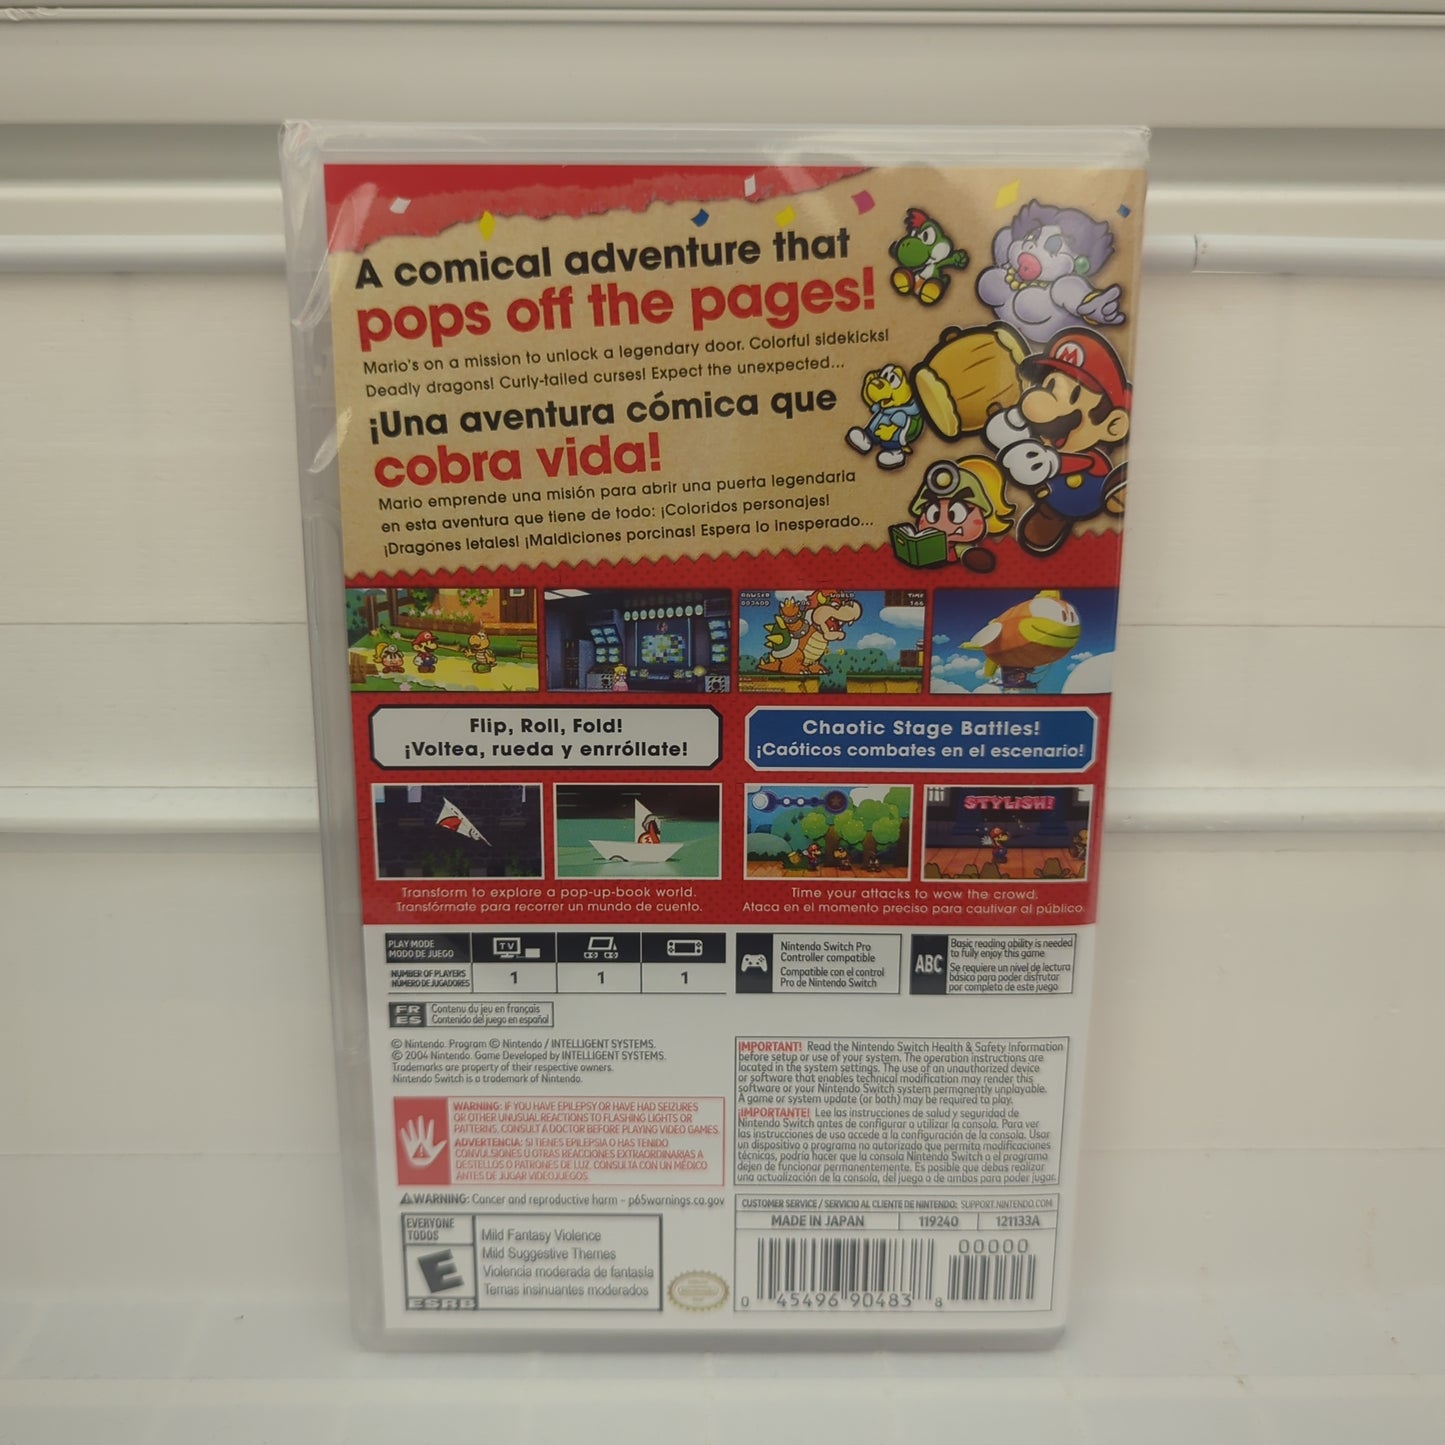 Paper Mario: The Thousand-Year Door - Nintendo Switch